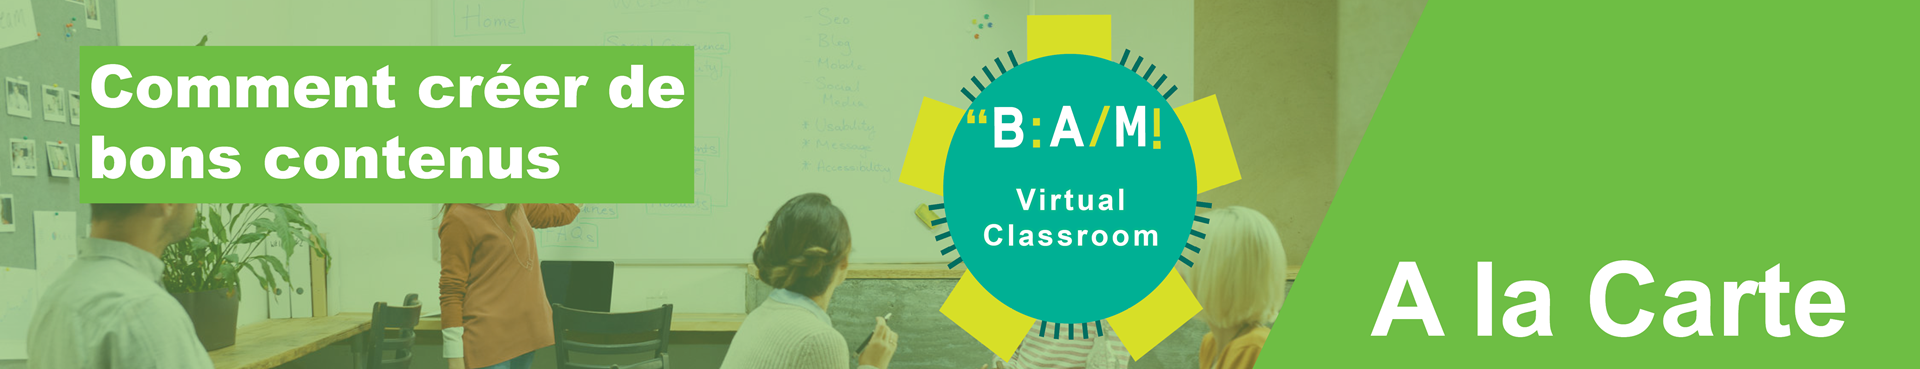 comment créer de bons contenus 1300-250_virtual classroom